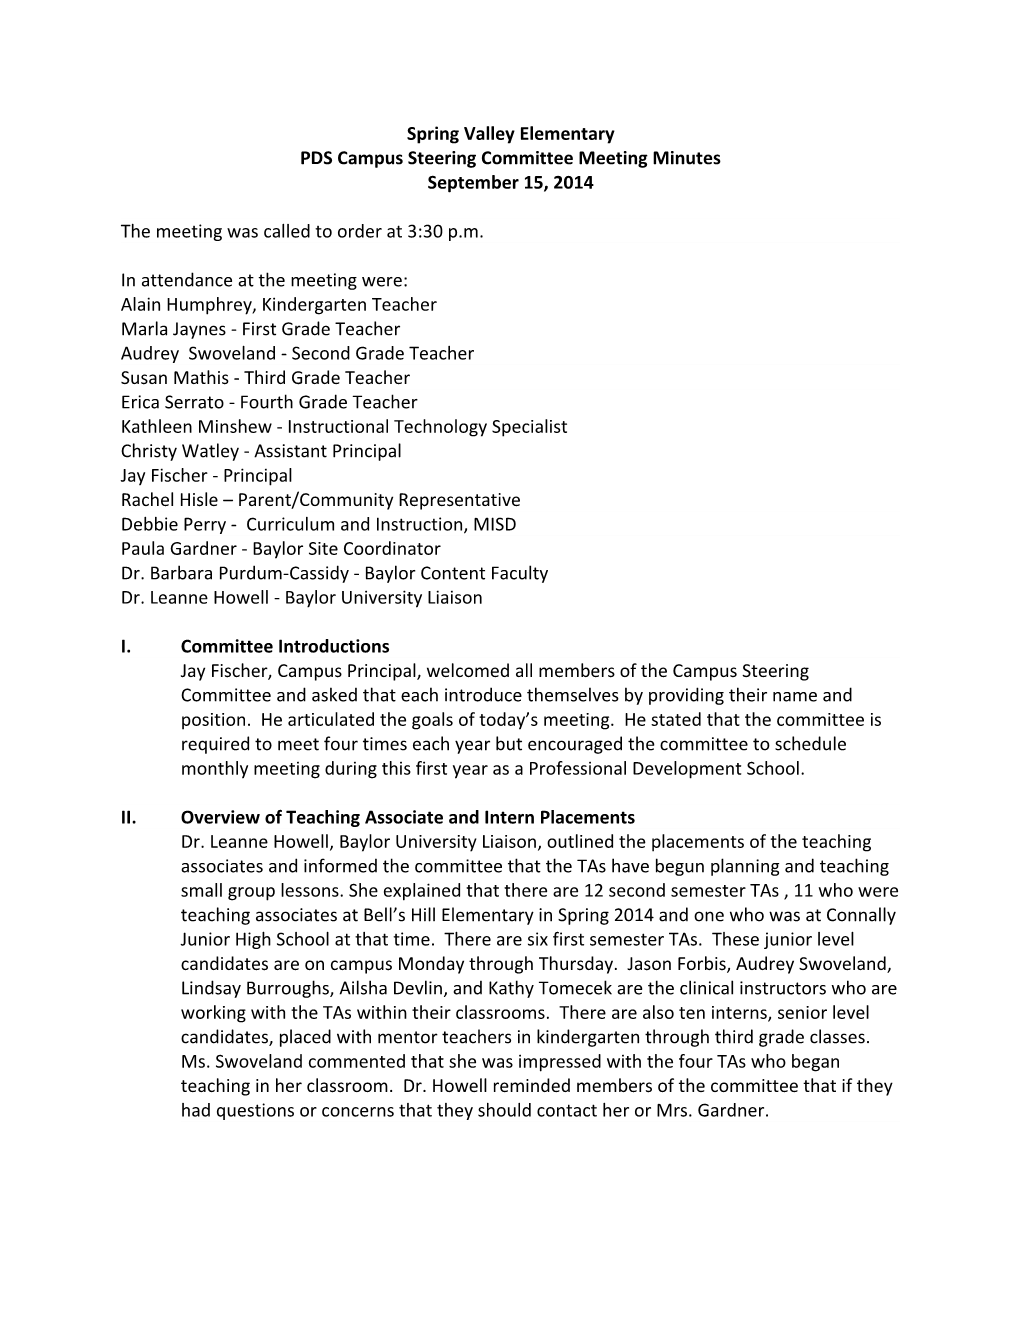 PDS Campus Steering Committee Meeting Minutes